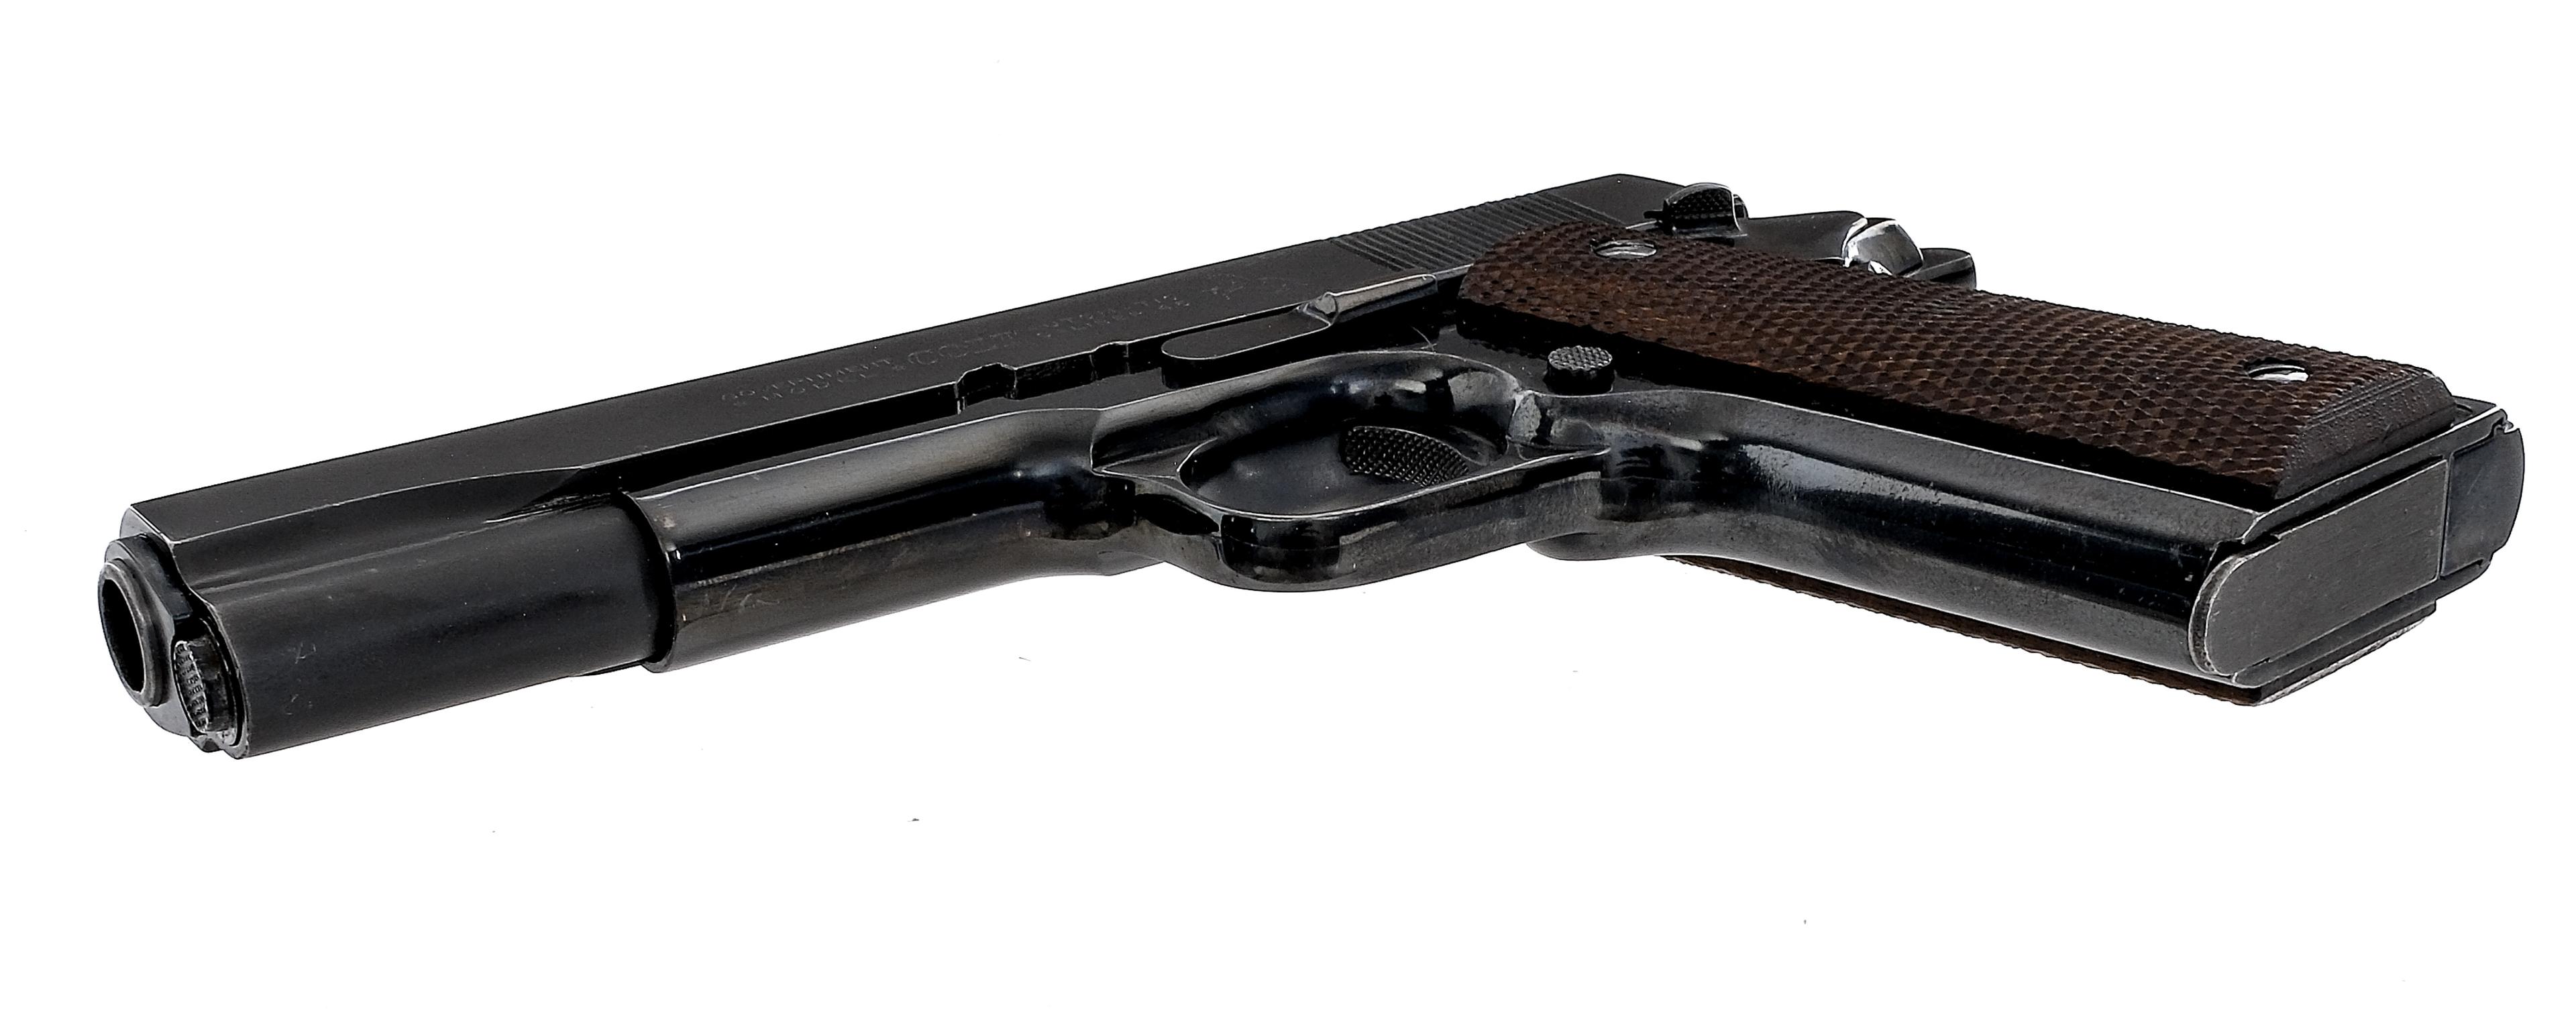 Colt 1911 Gov Model .45/.38 Super Semi Auto Pistol